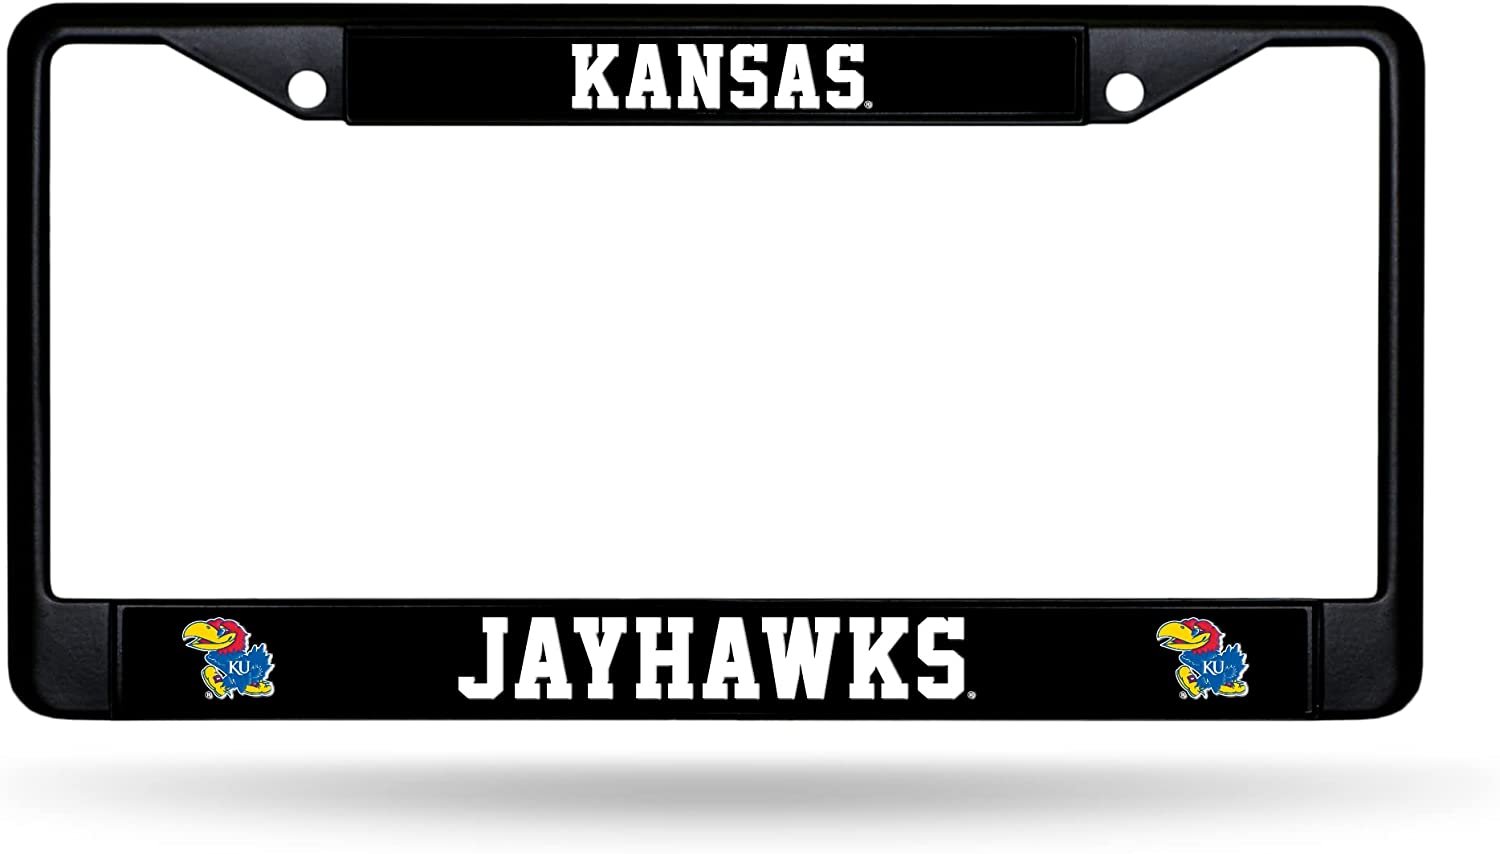 University of Kansas Jayhawks Black Metal License Plate Frame Chrome Tag Cover 6x12 Inch